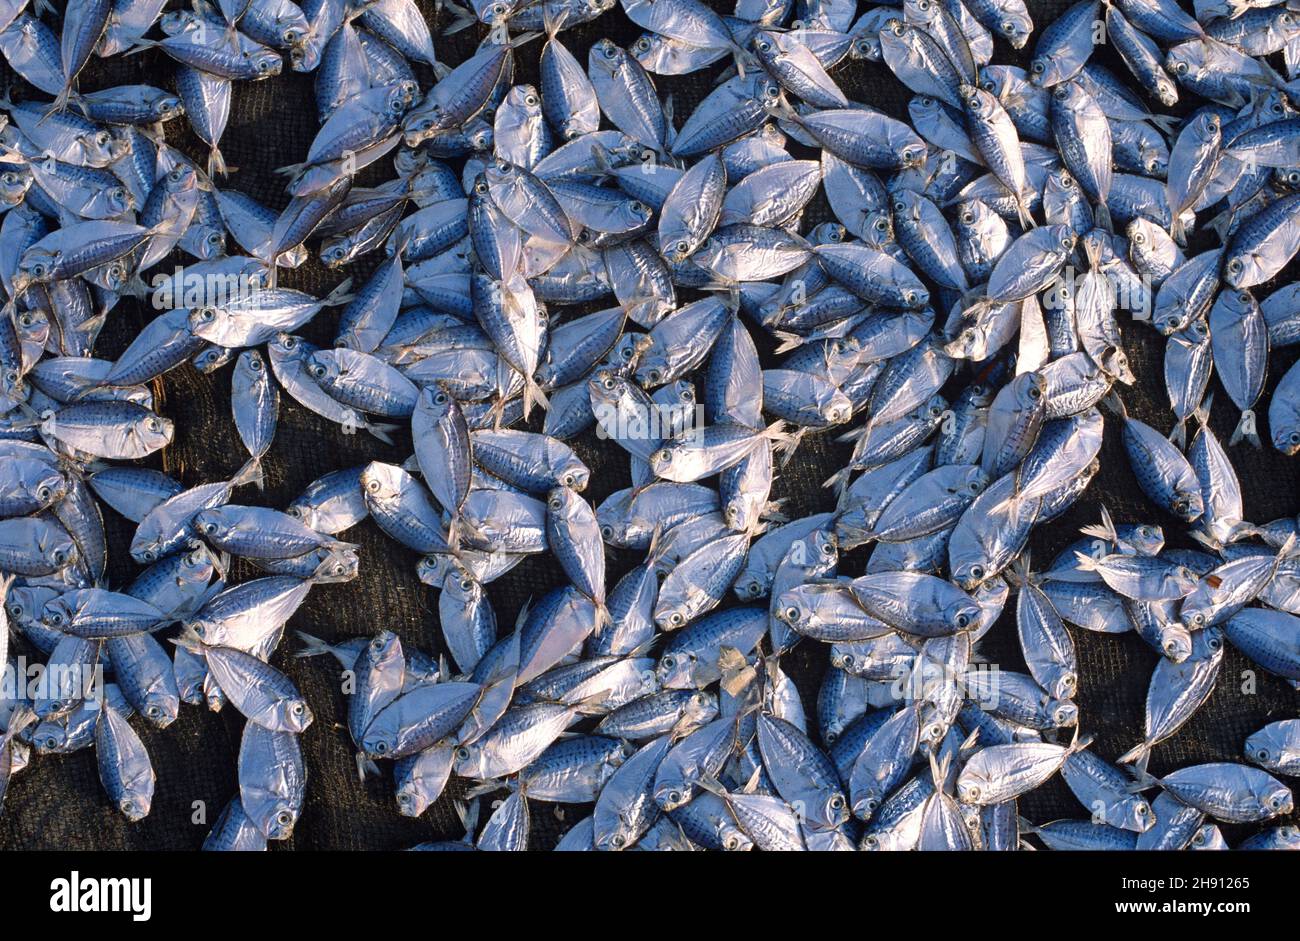 Makassar o Ujung Pandang, dettaglio di pesce essiccato. Sulawesi, Indonesia. Foto Stock